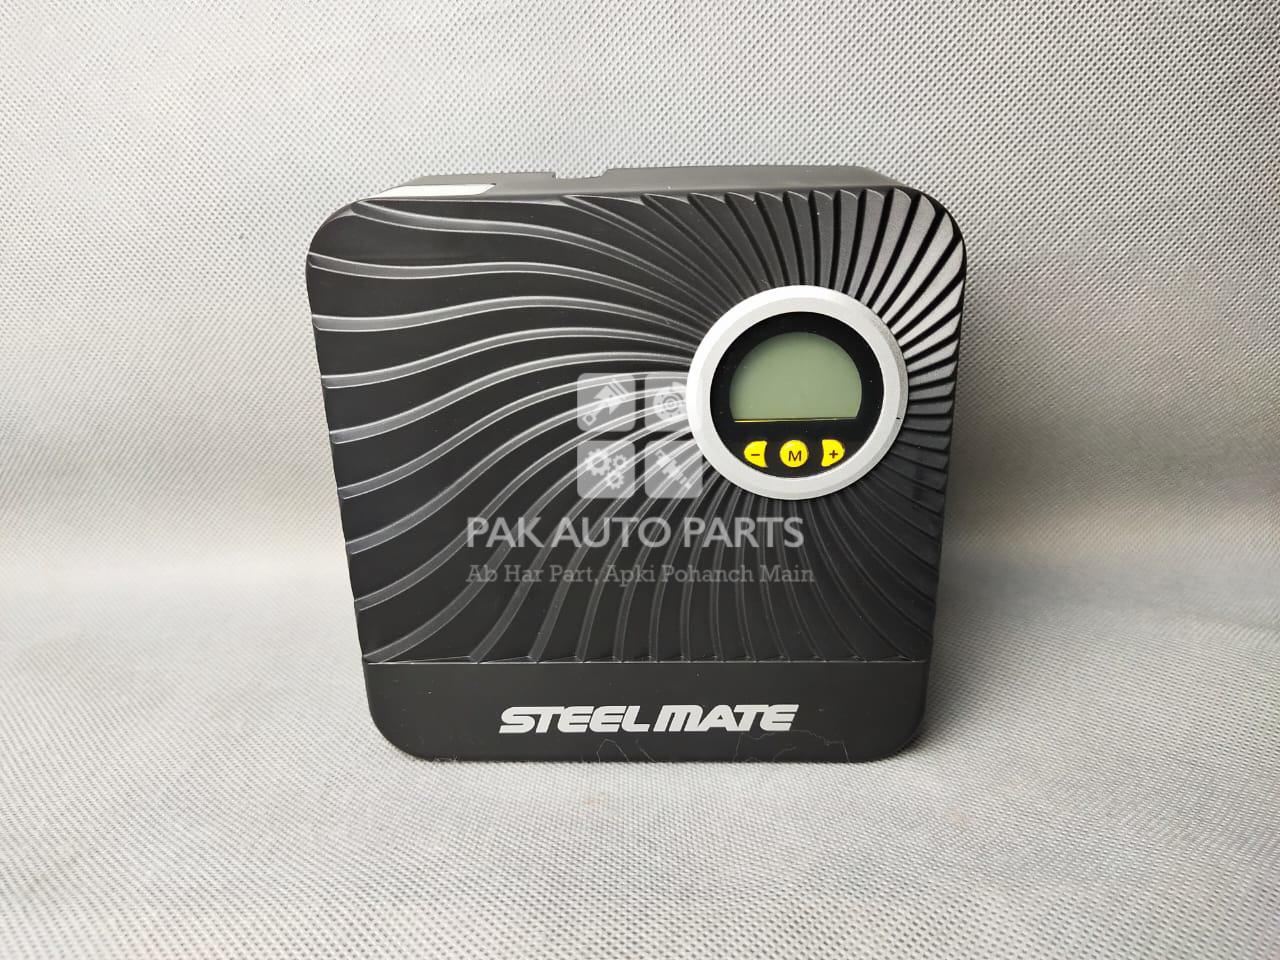 Picture of Steel Mate Digital Air Compressor